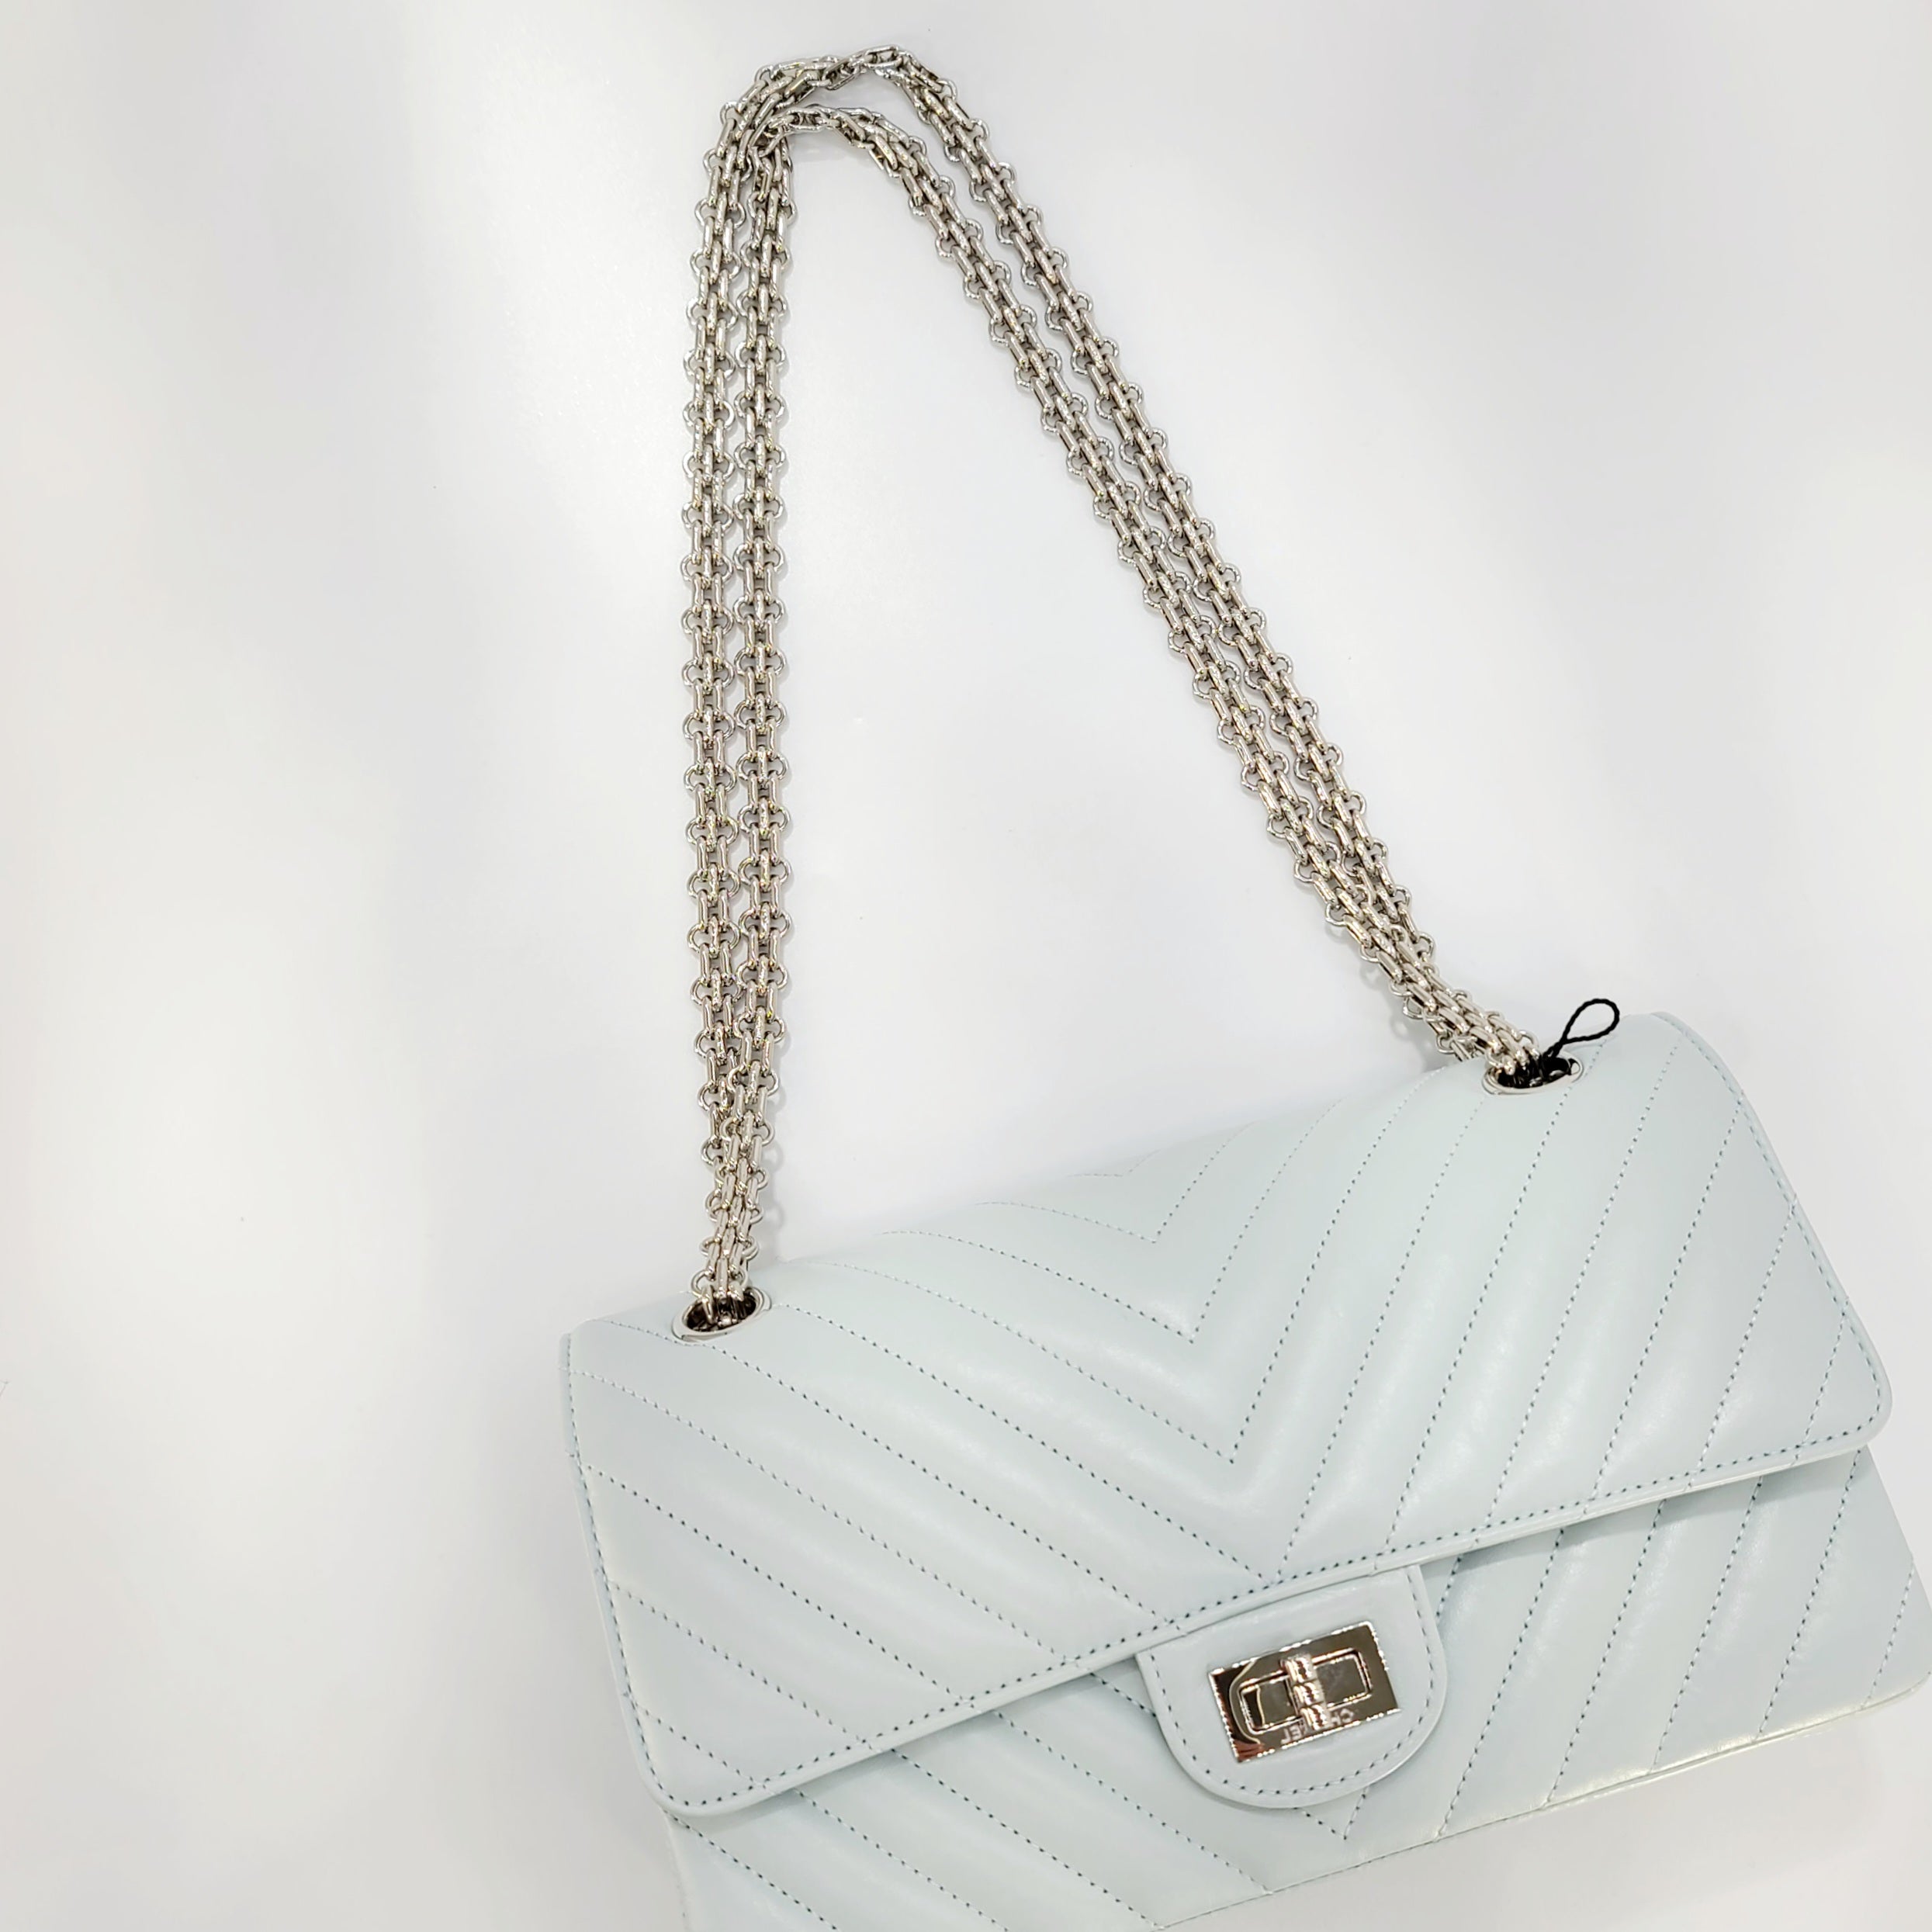 2022 Year Brand New Chanel 2.55 Handbag Aged Calfskin & Silver-Tone Metal Light Blue